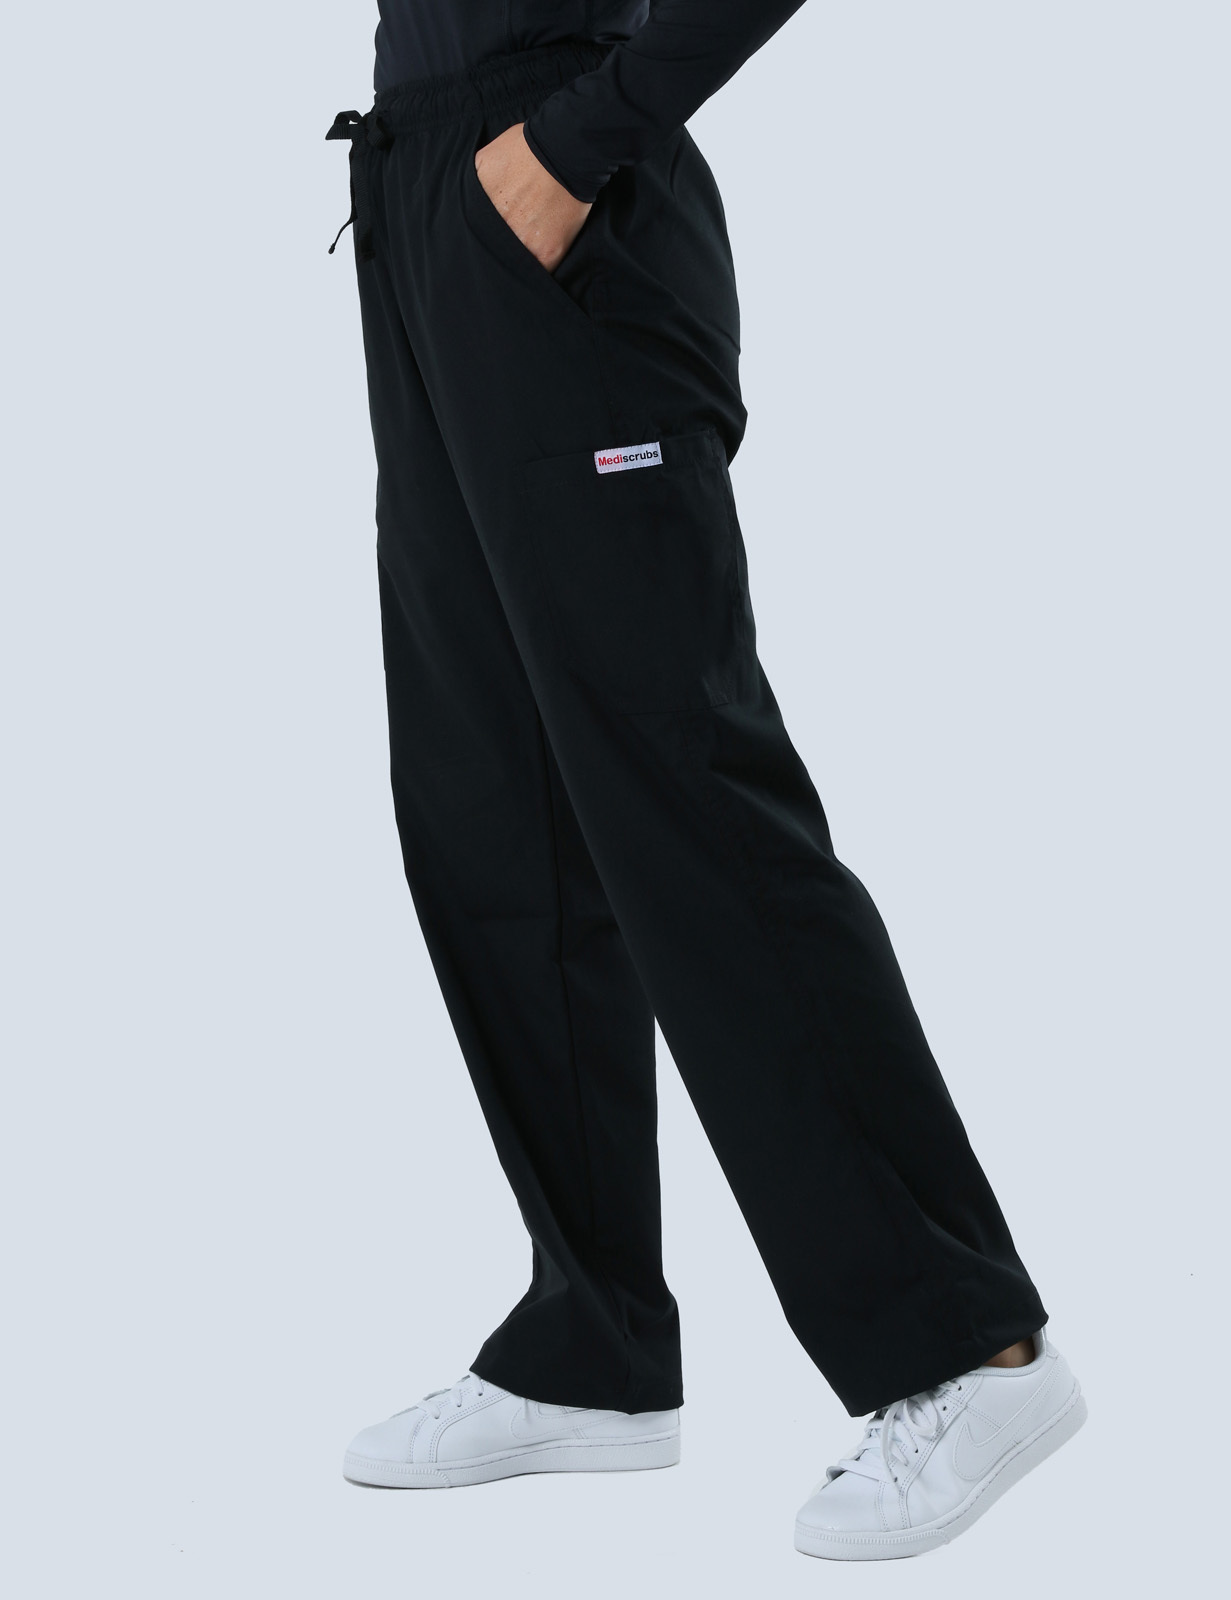 Moranbah Hospital - Nursing (4 Pocket Scrub Top and Cargo Pants in Black incl Logos)